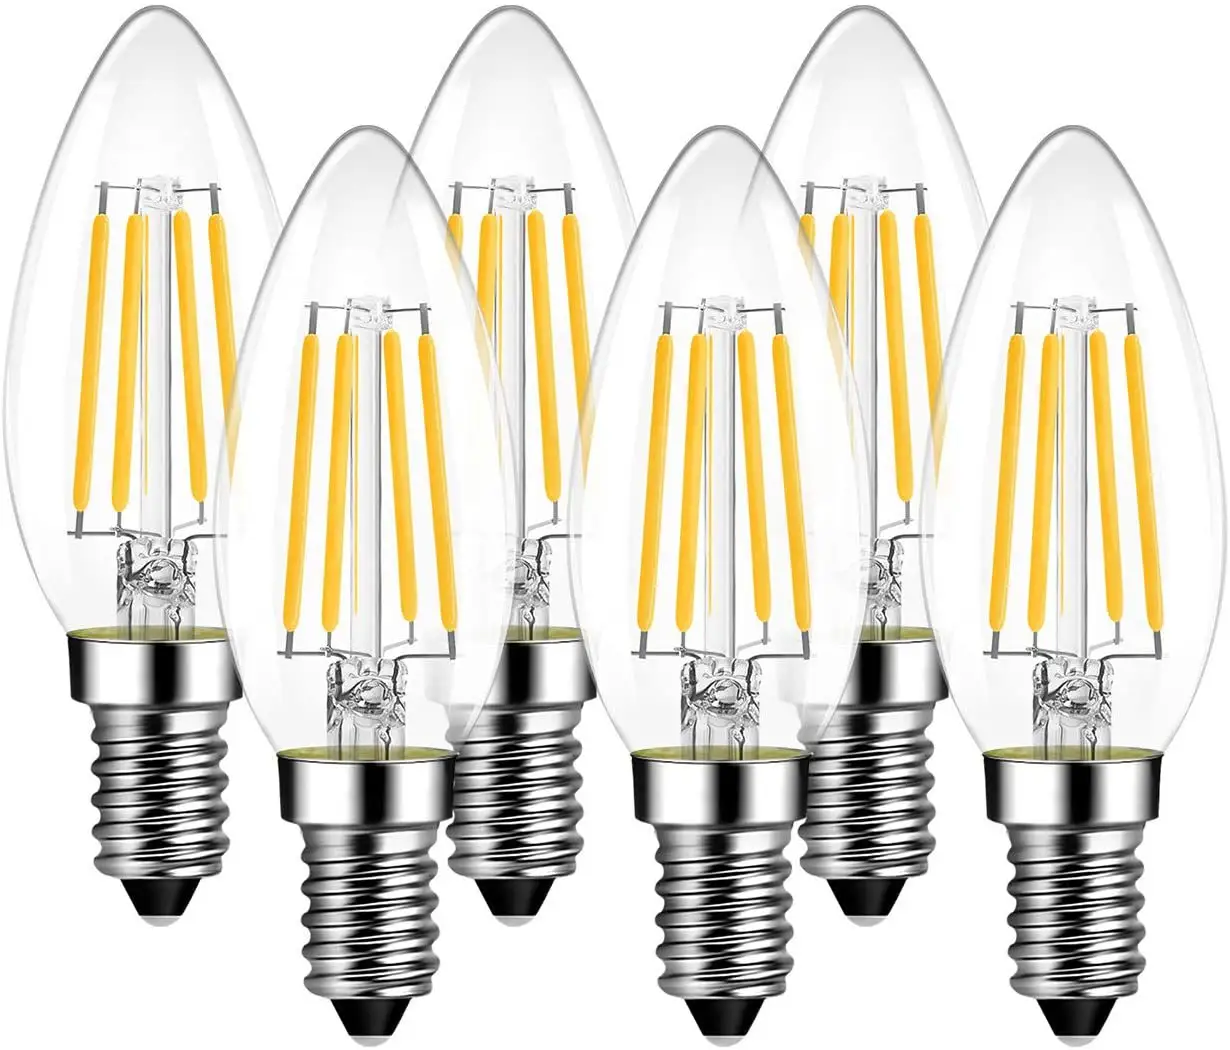 Wholesale Custom High Quality C32 Bulb For Long Lasting and Energy Saving Light Solution